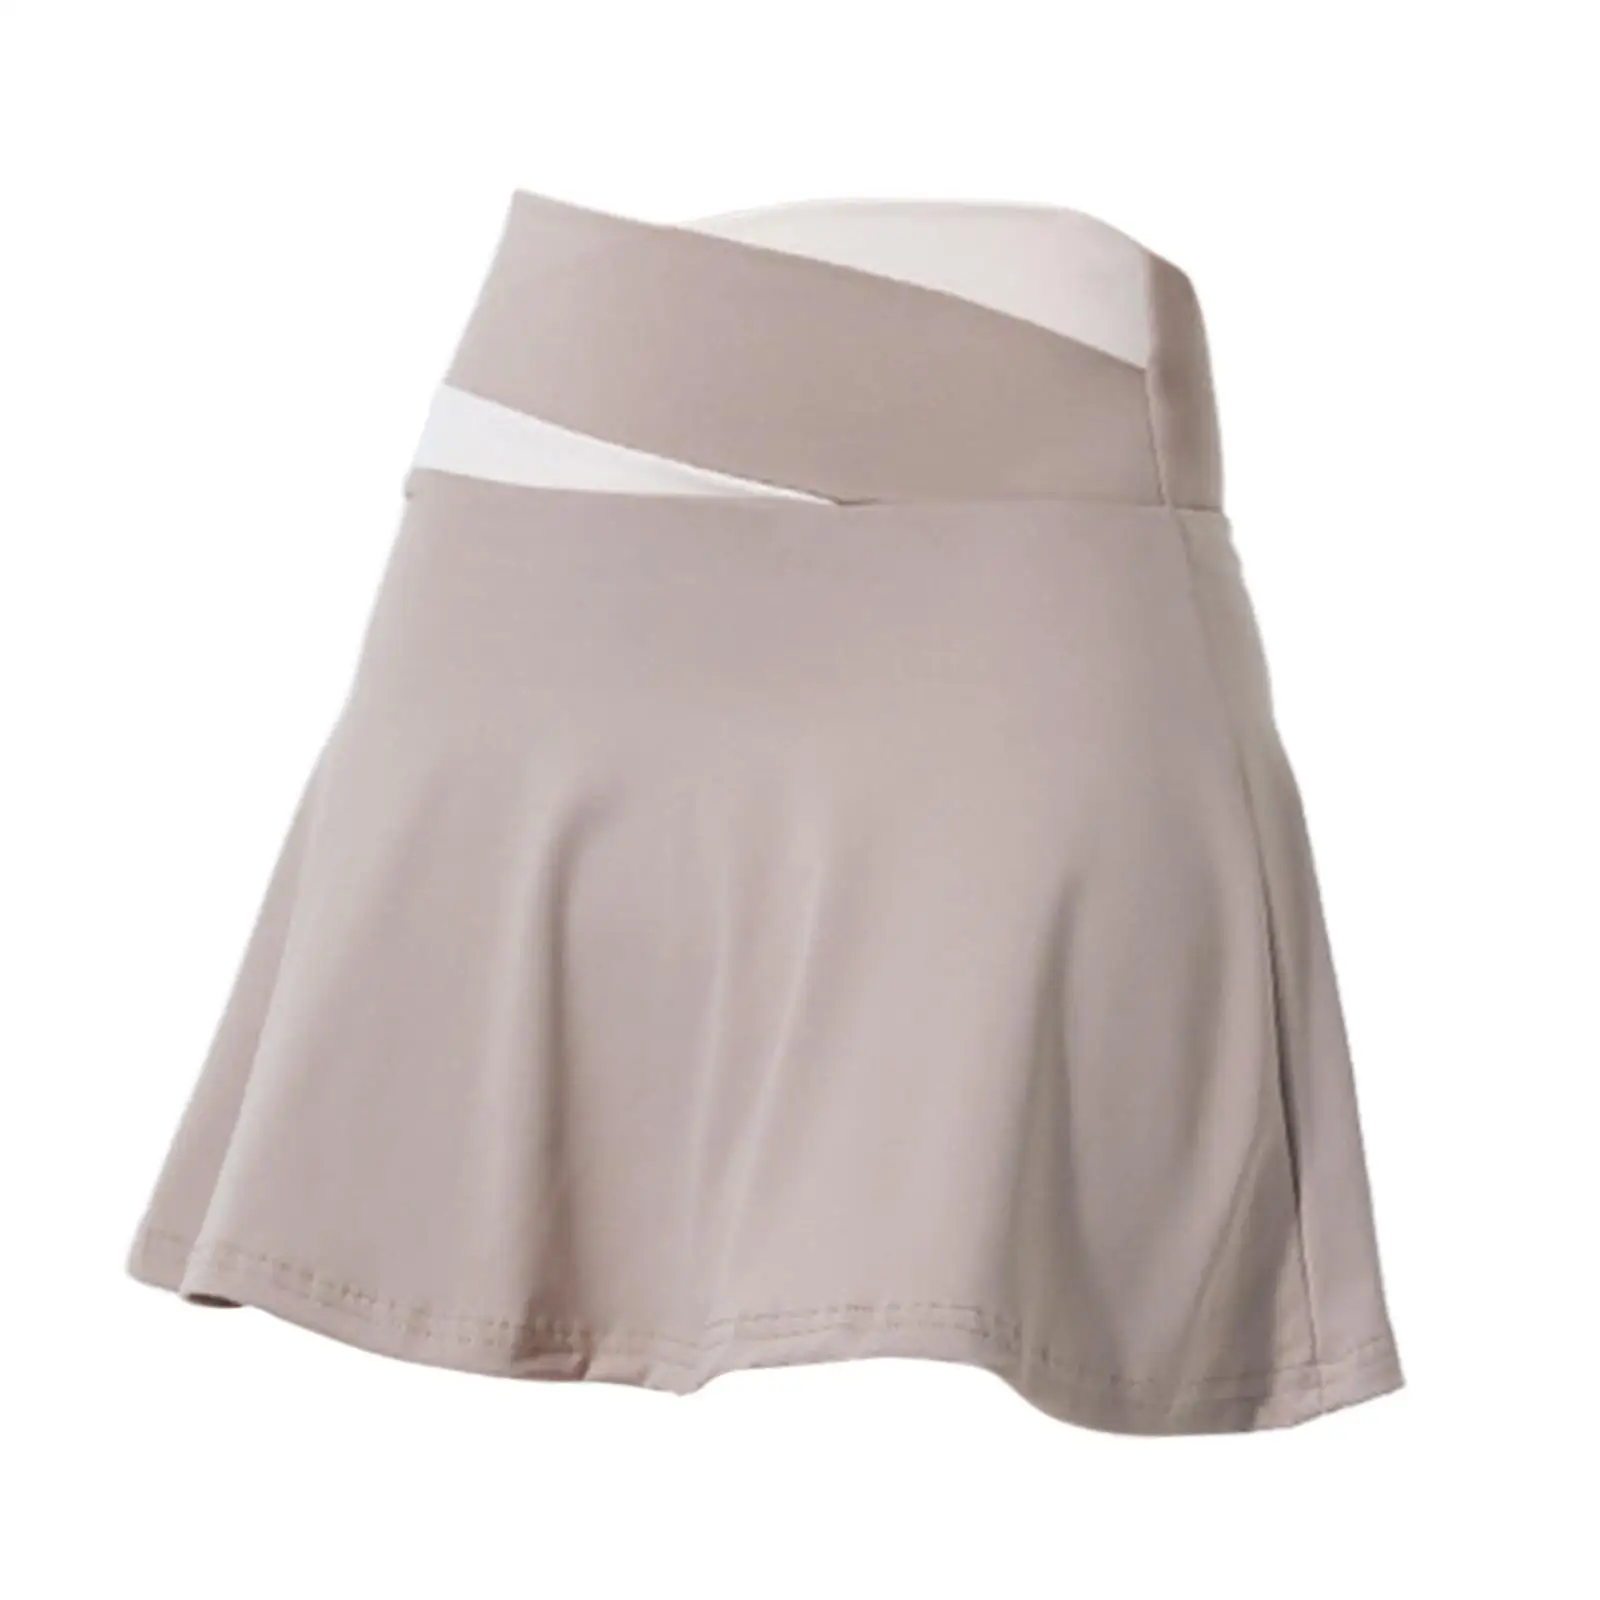 Tennis Skirt Short Skirts Quick Drying Clothing Soft Gymwear High Waist Golf Skorts for Workout Tennis Jogging Exercise Fitness